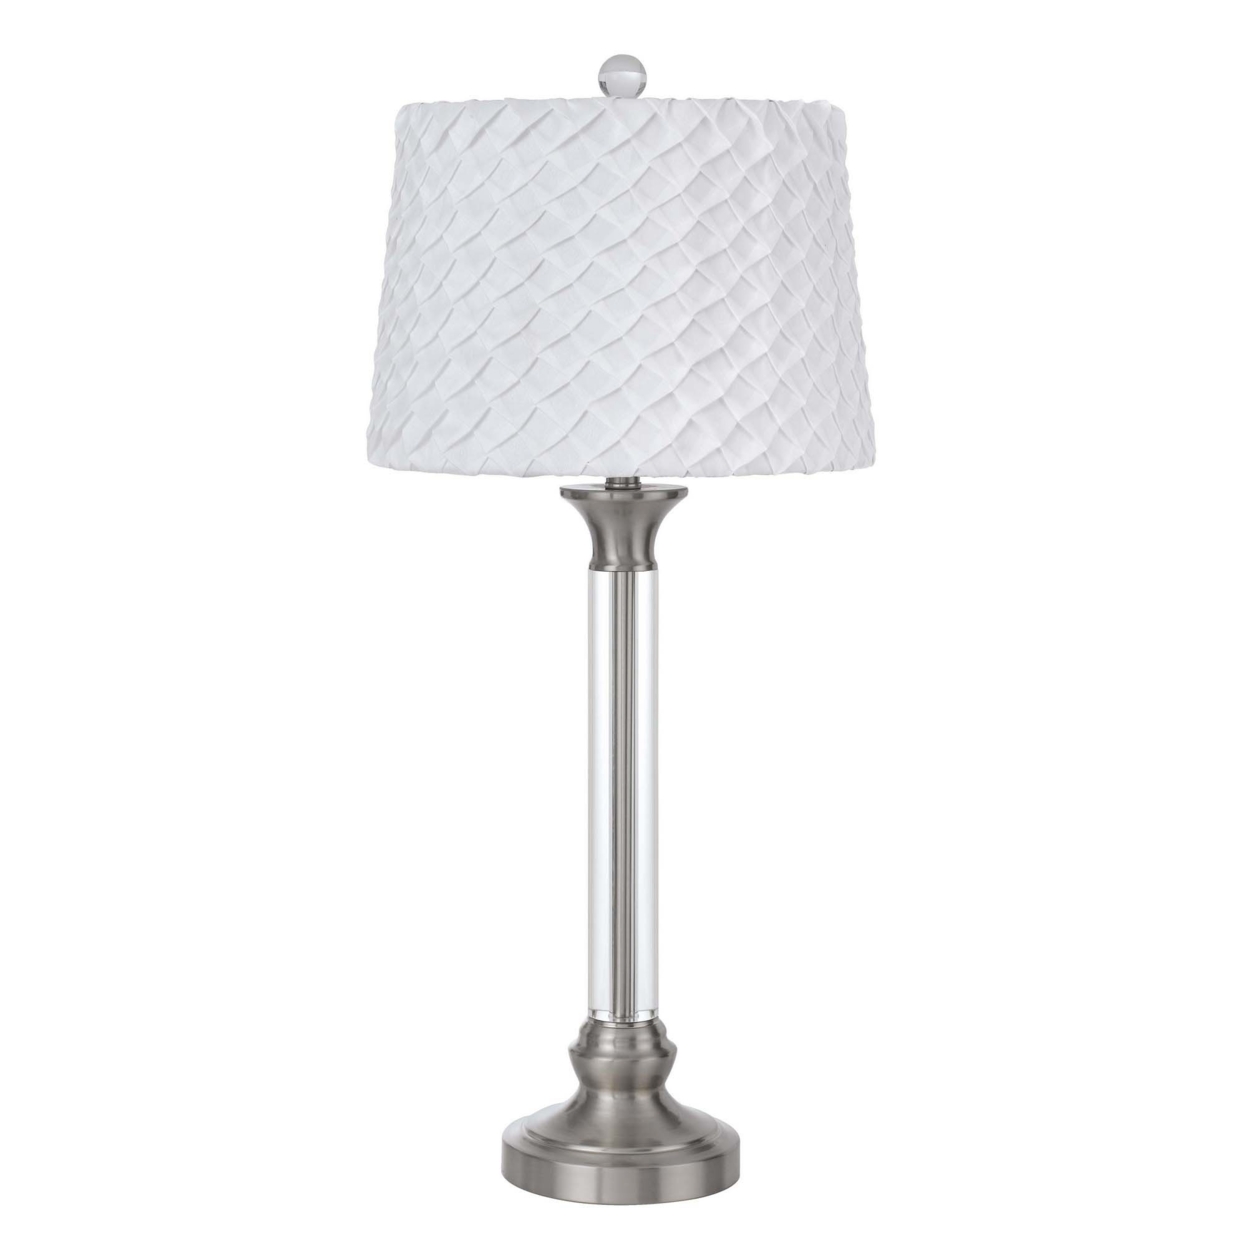 Table Lamp With Tubular Metal And Crystal Base, White And Silver- Saltoro Sherpi